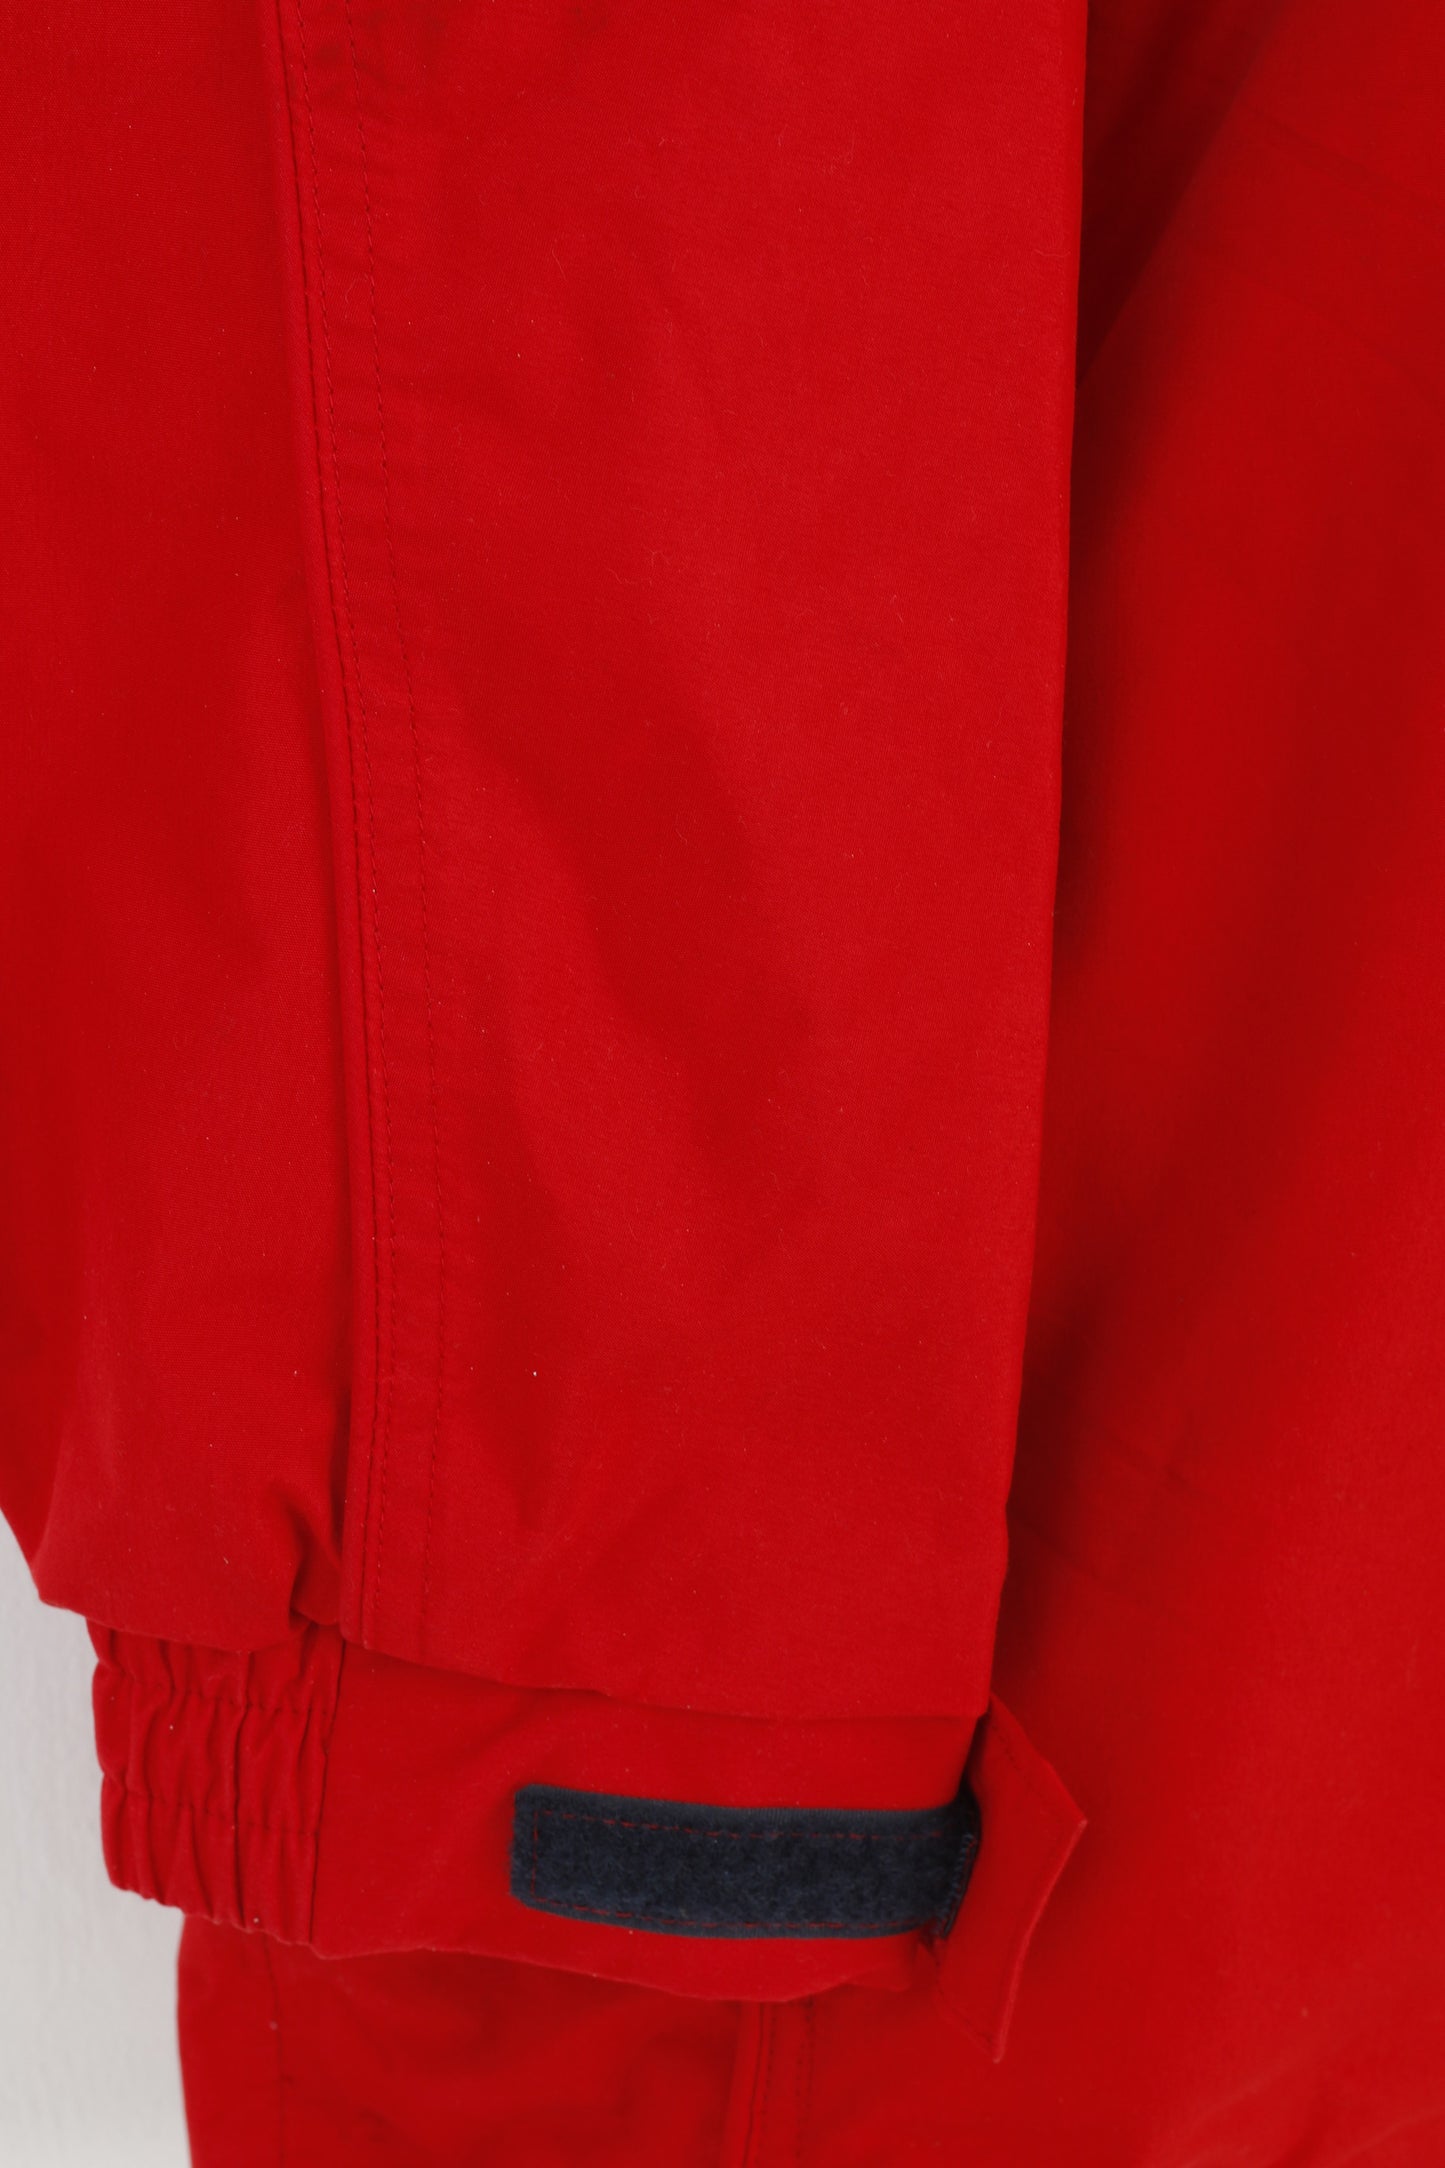 Trespass Woman M Jacket Red Full Zipper Waterproof Pockets Hood Vintage Top